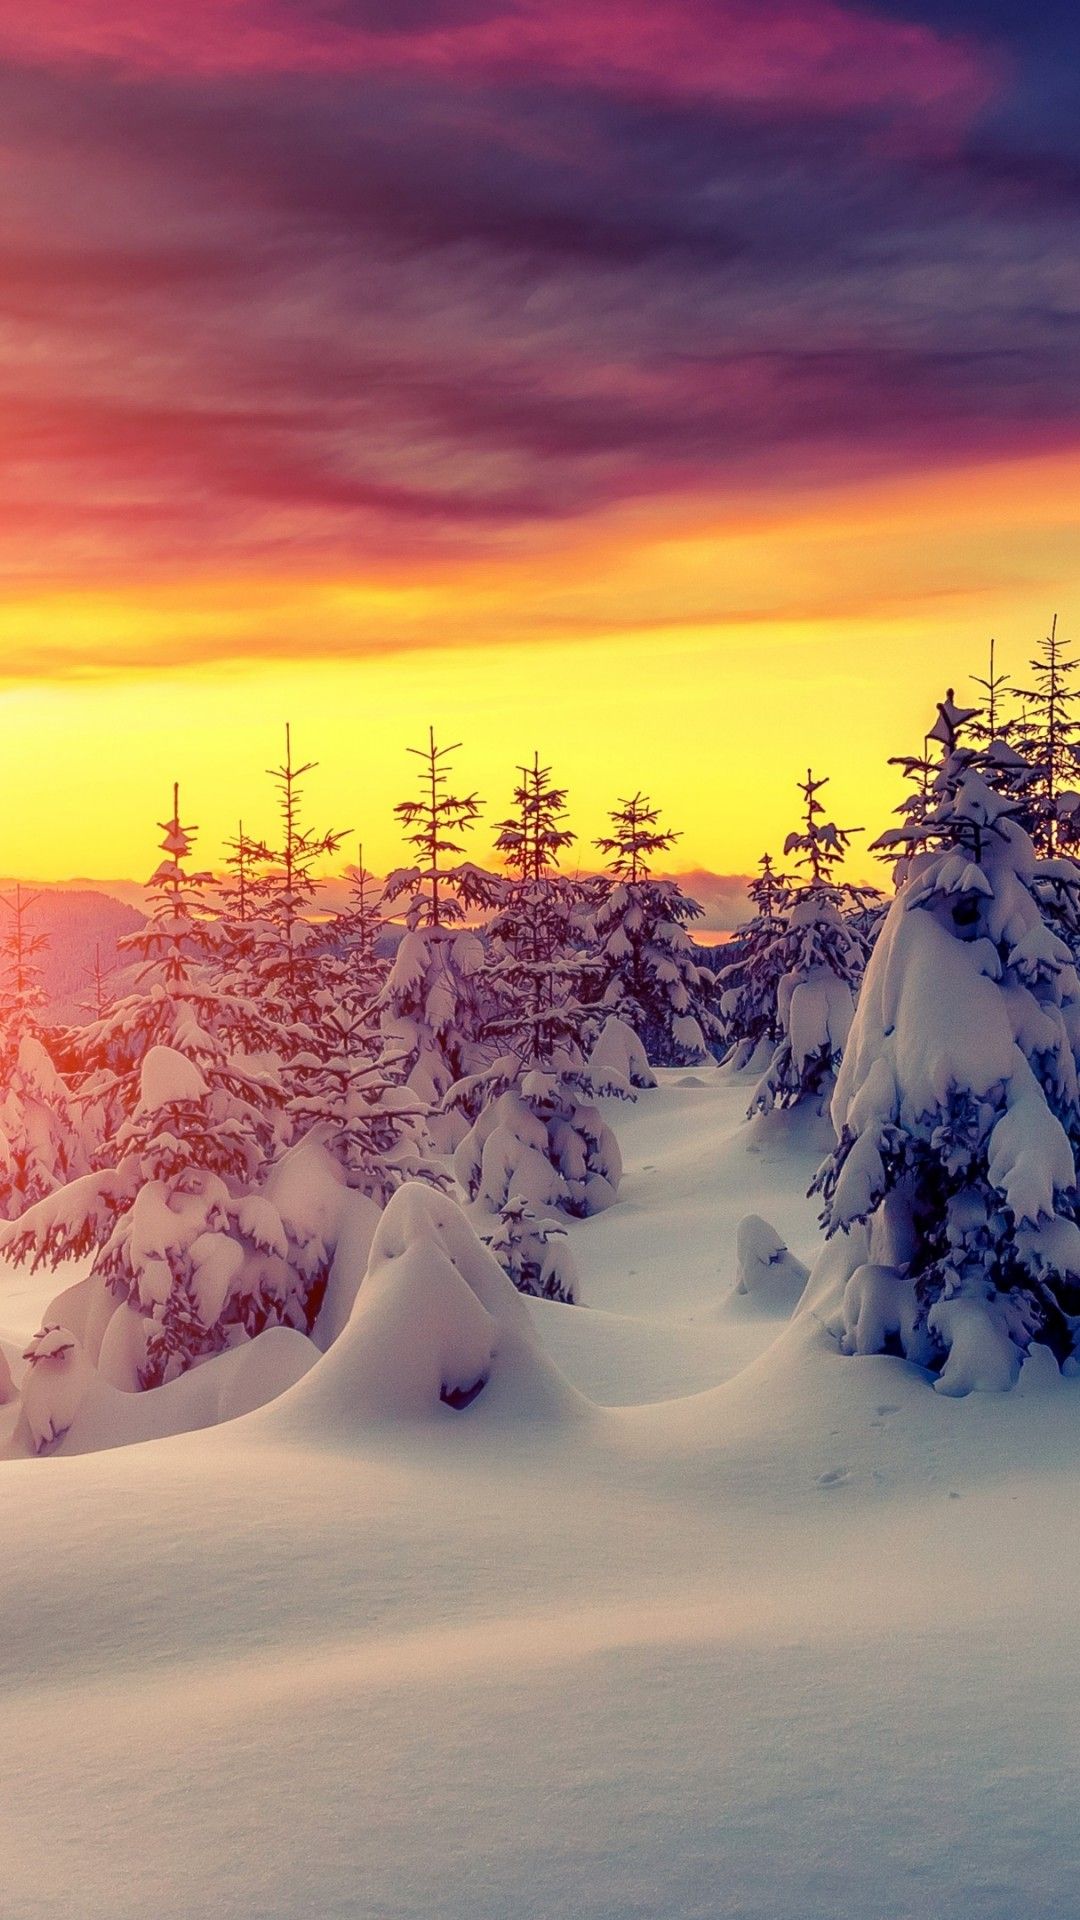 Winter Sunset With Snow 4k Ultra HD Wallpaper